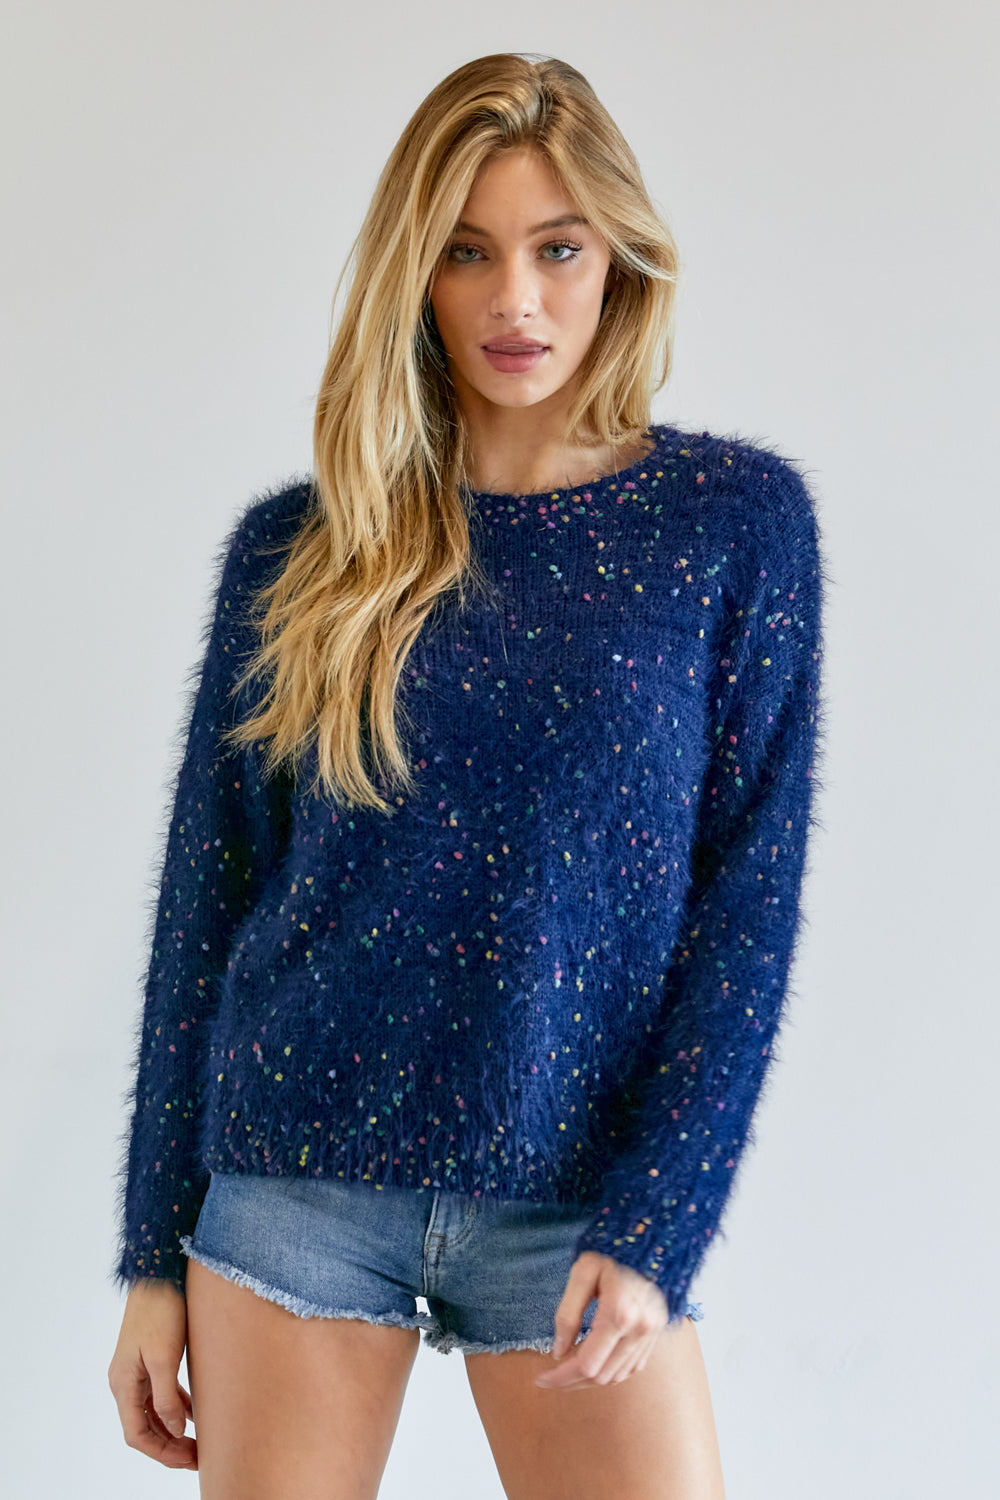 Davi & Dani Multi Color Polka Dot Sweater - Navy Shirts & Tops RYSE Clothing Co.   